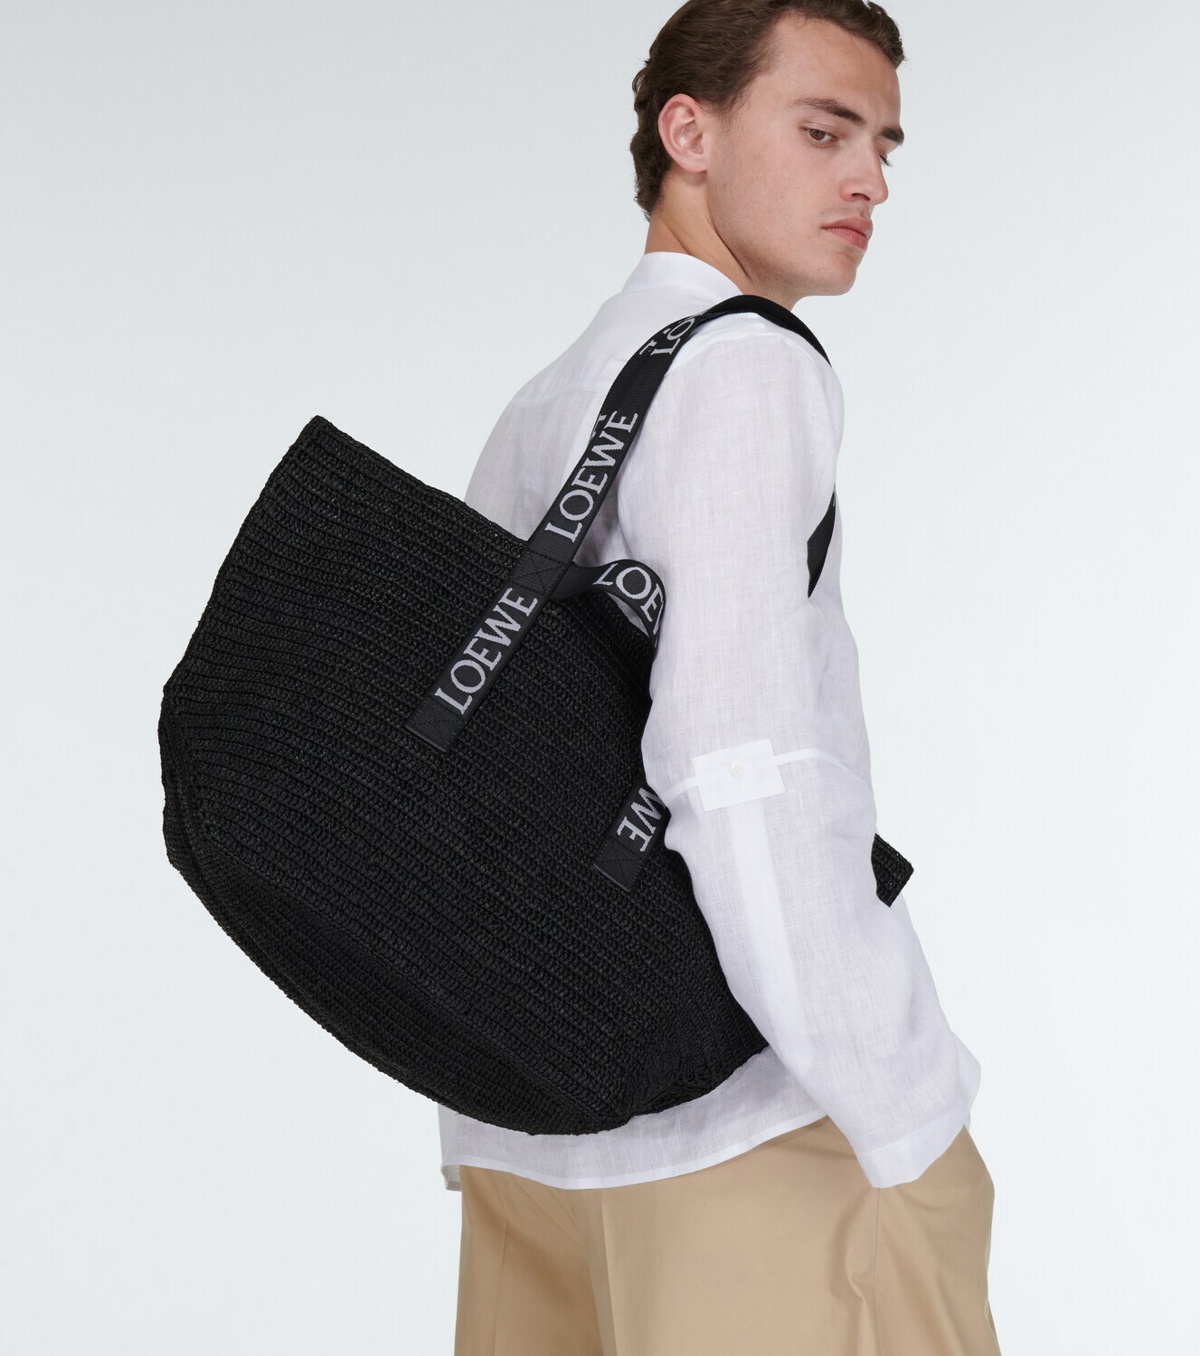 Fold Shopper Leather Tote Bag in Black - Loewe